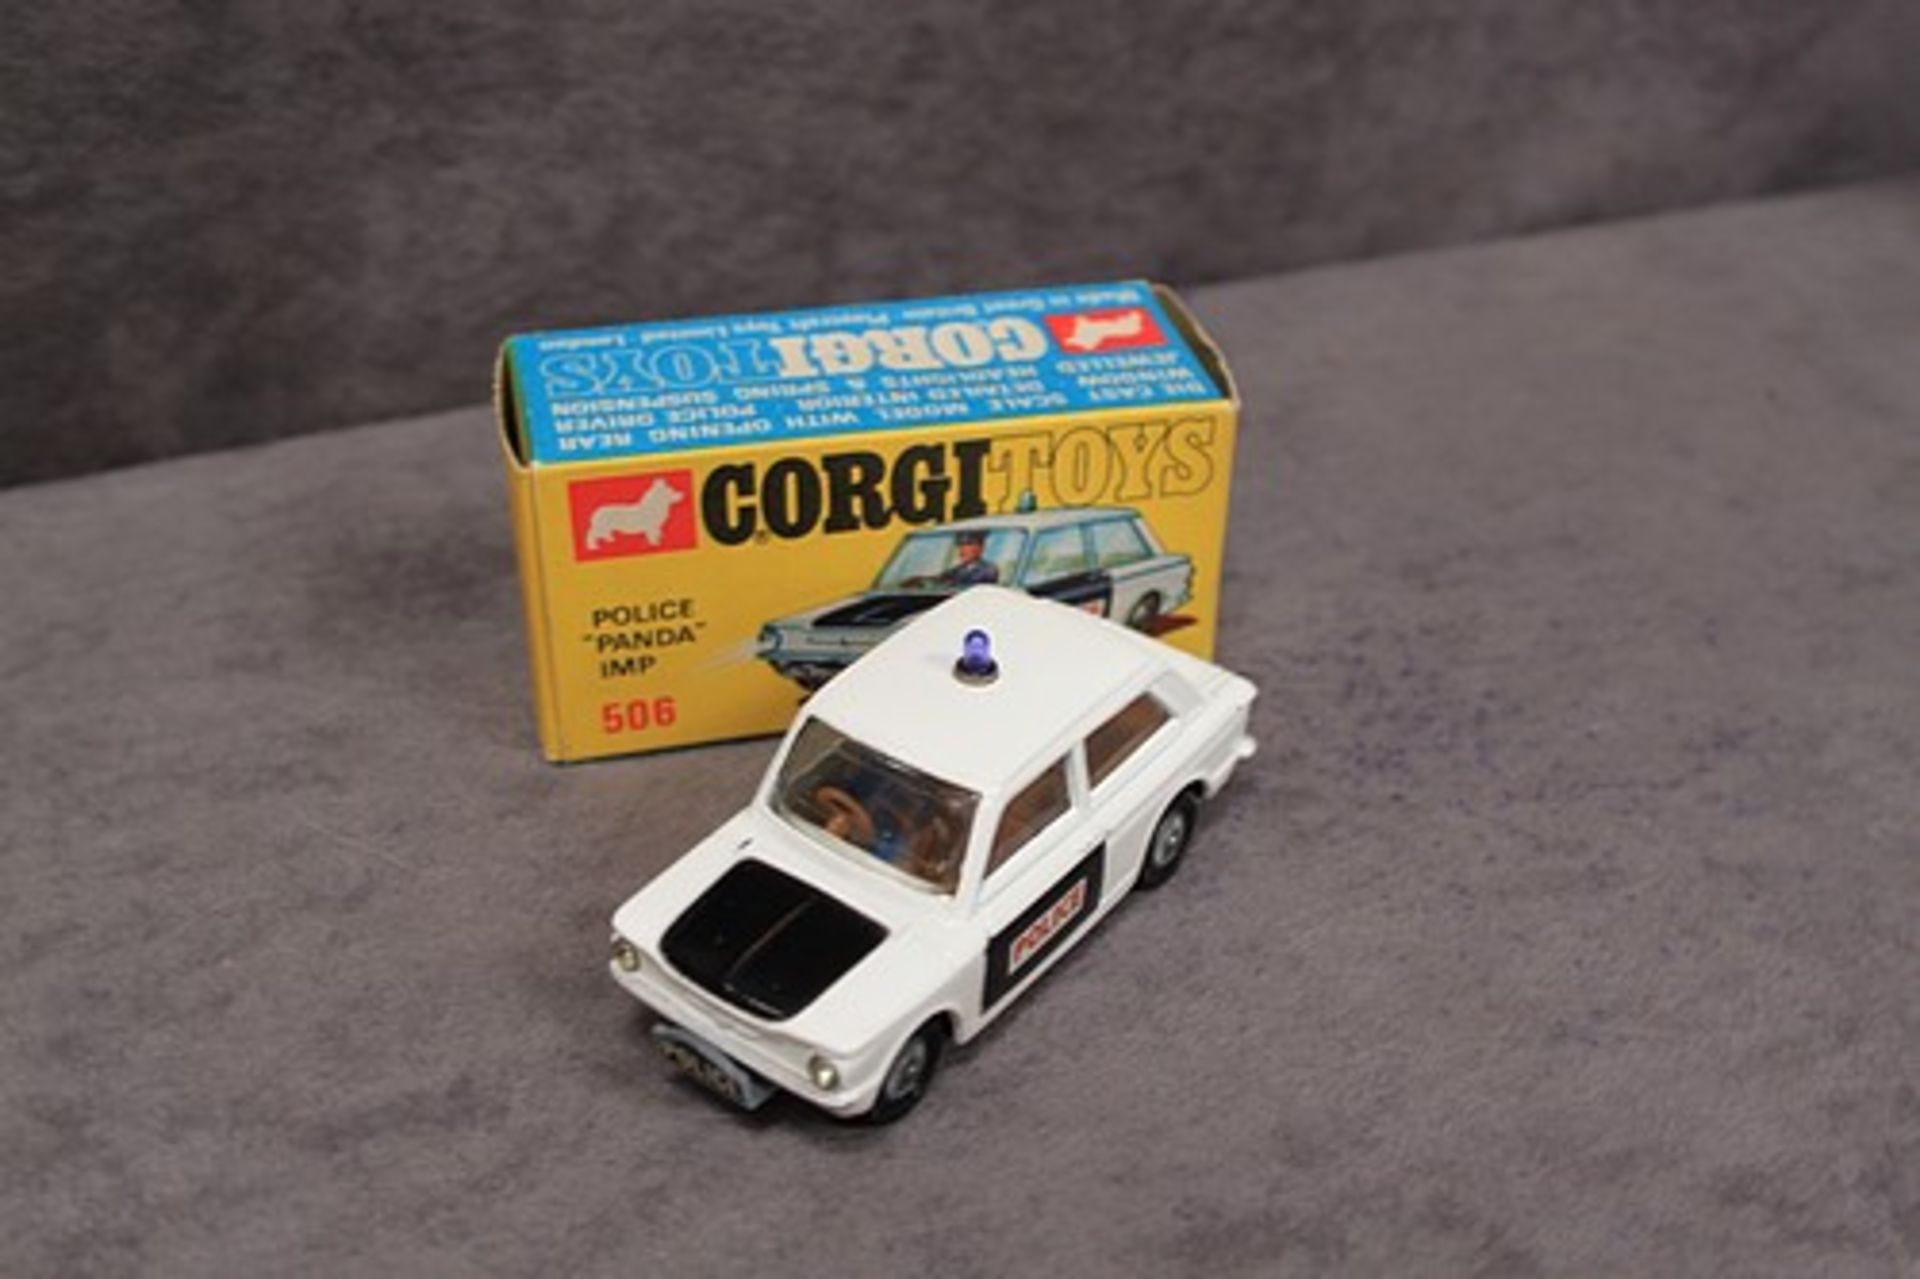 Mint Corgi Toys Diecast #506 Police Panda Imp in a crisp box - Image 2 of 2